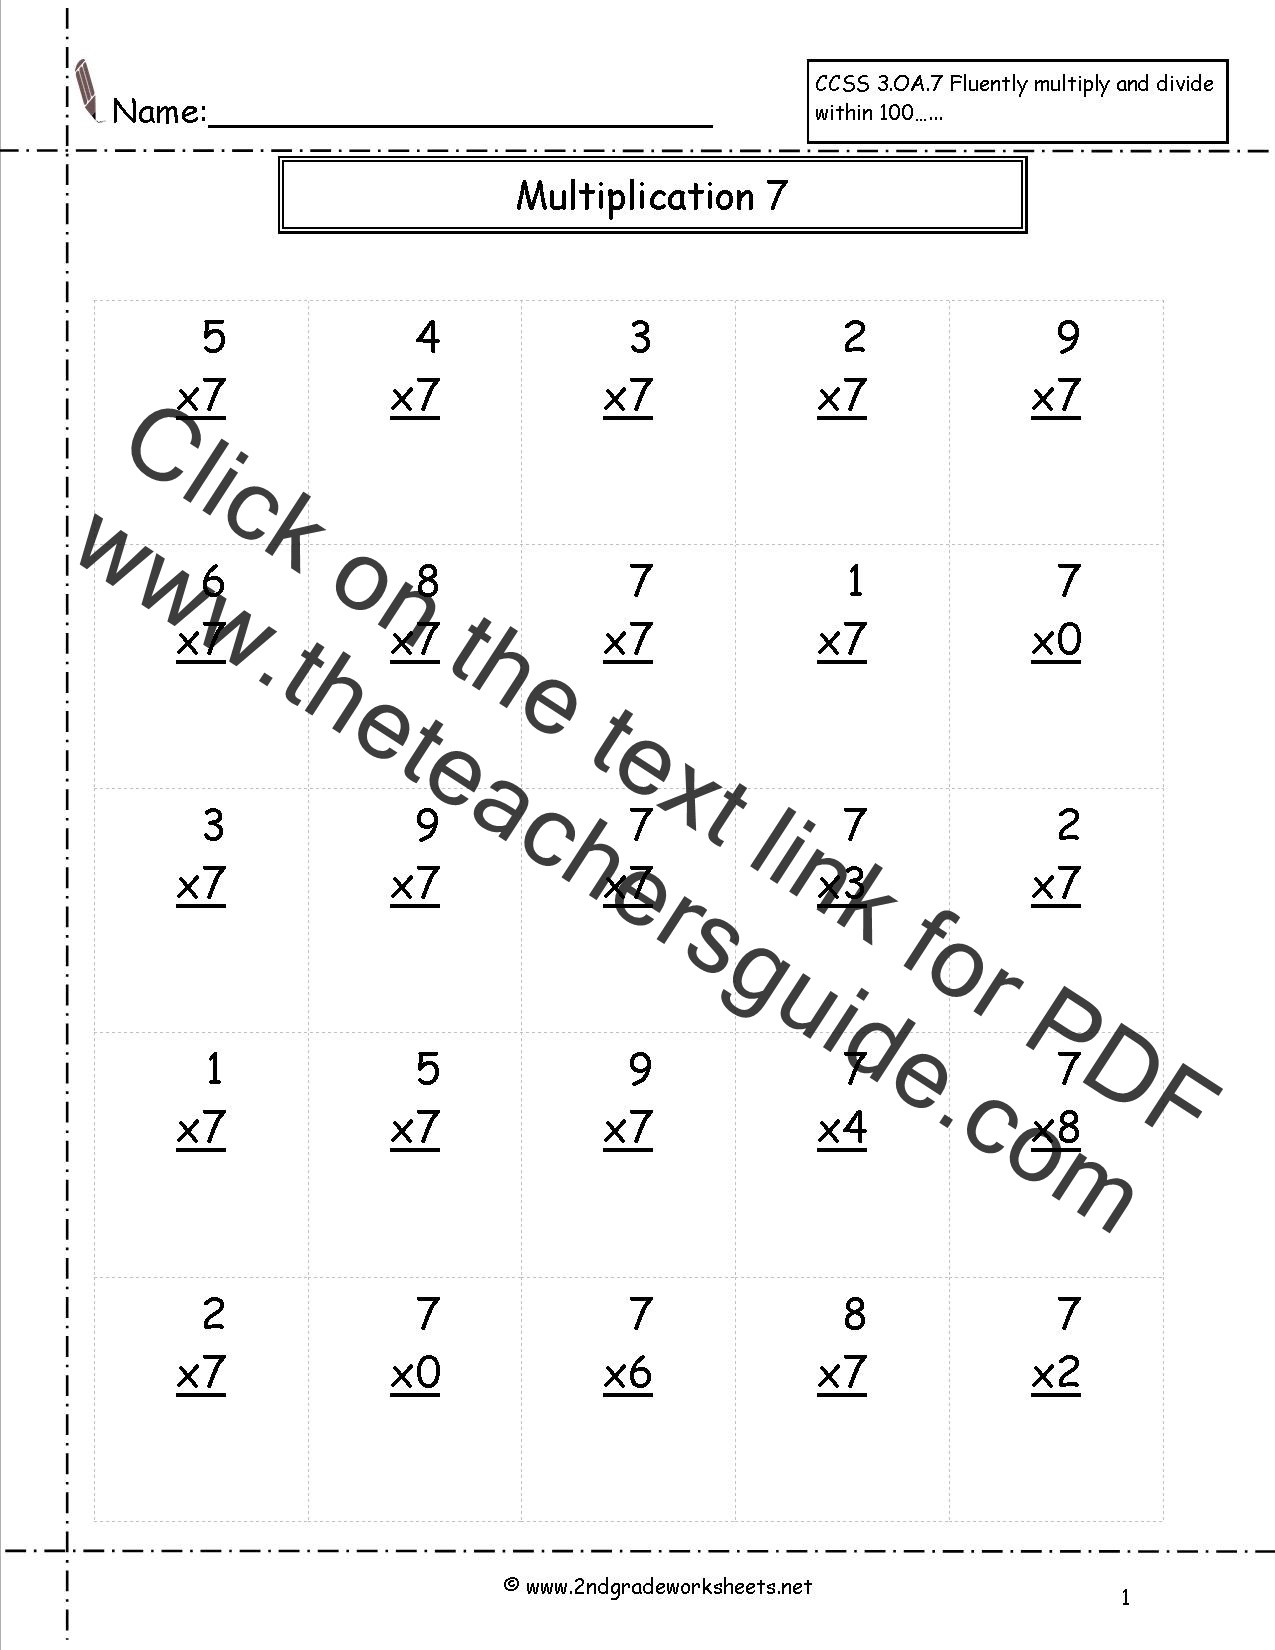 multiplication-worksheets-6-7-8-9-printablemultiplication